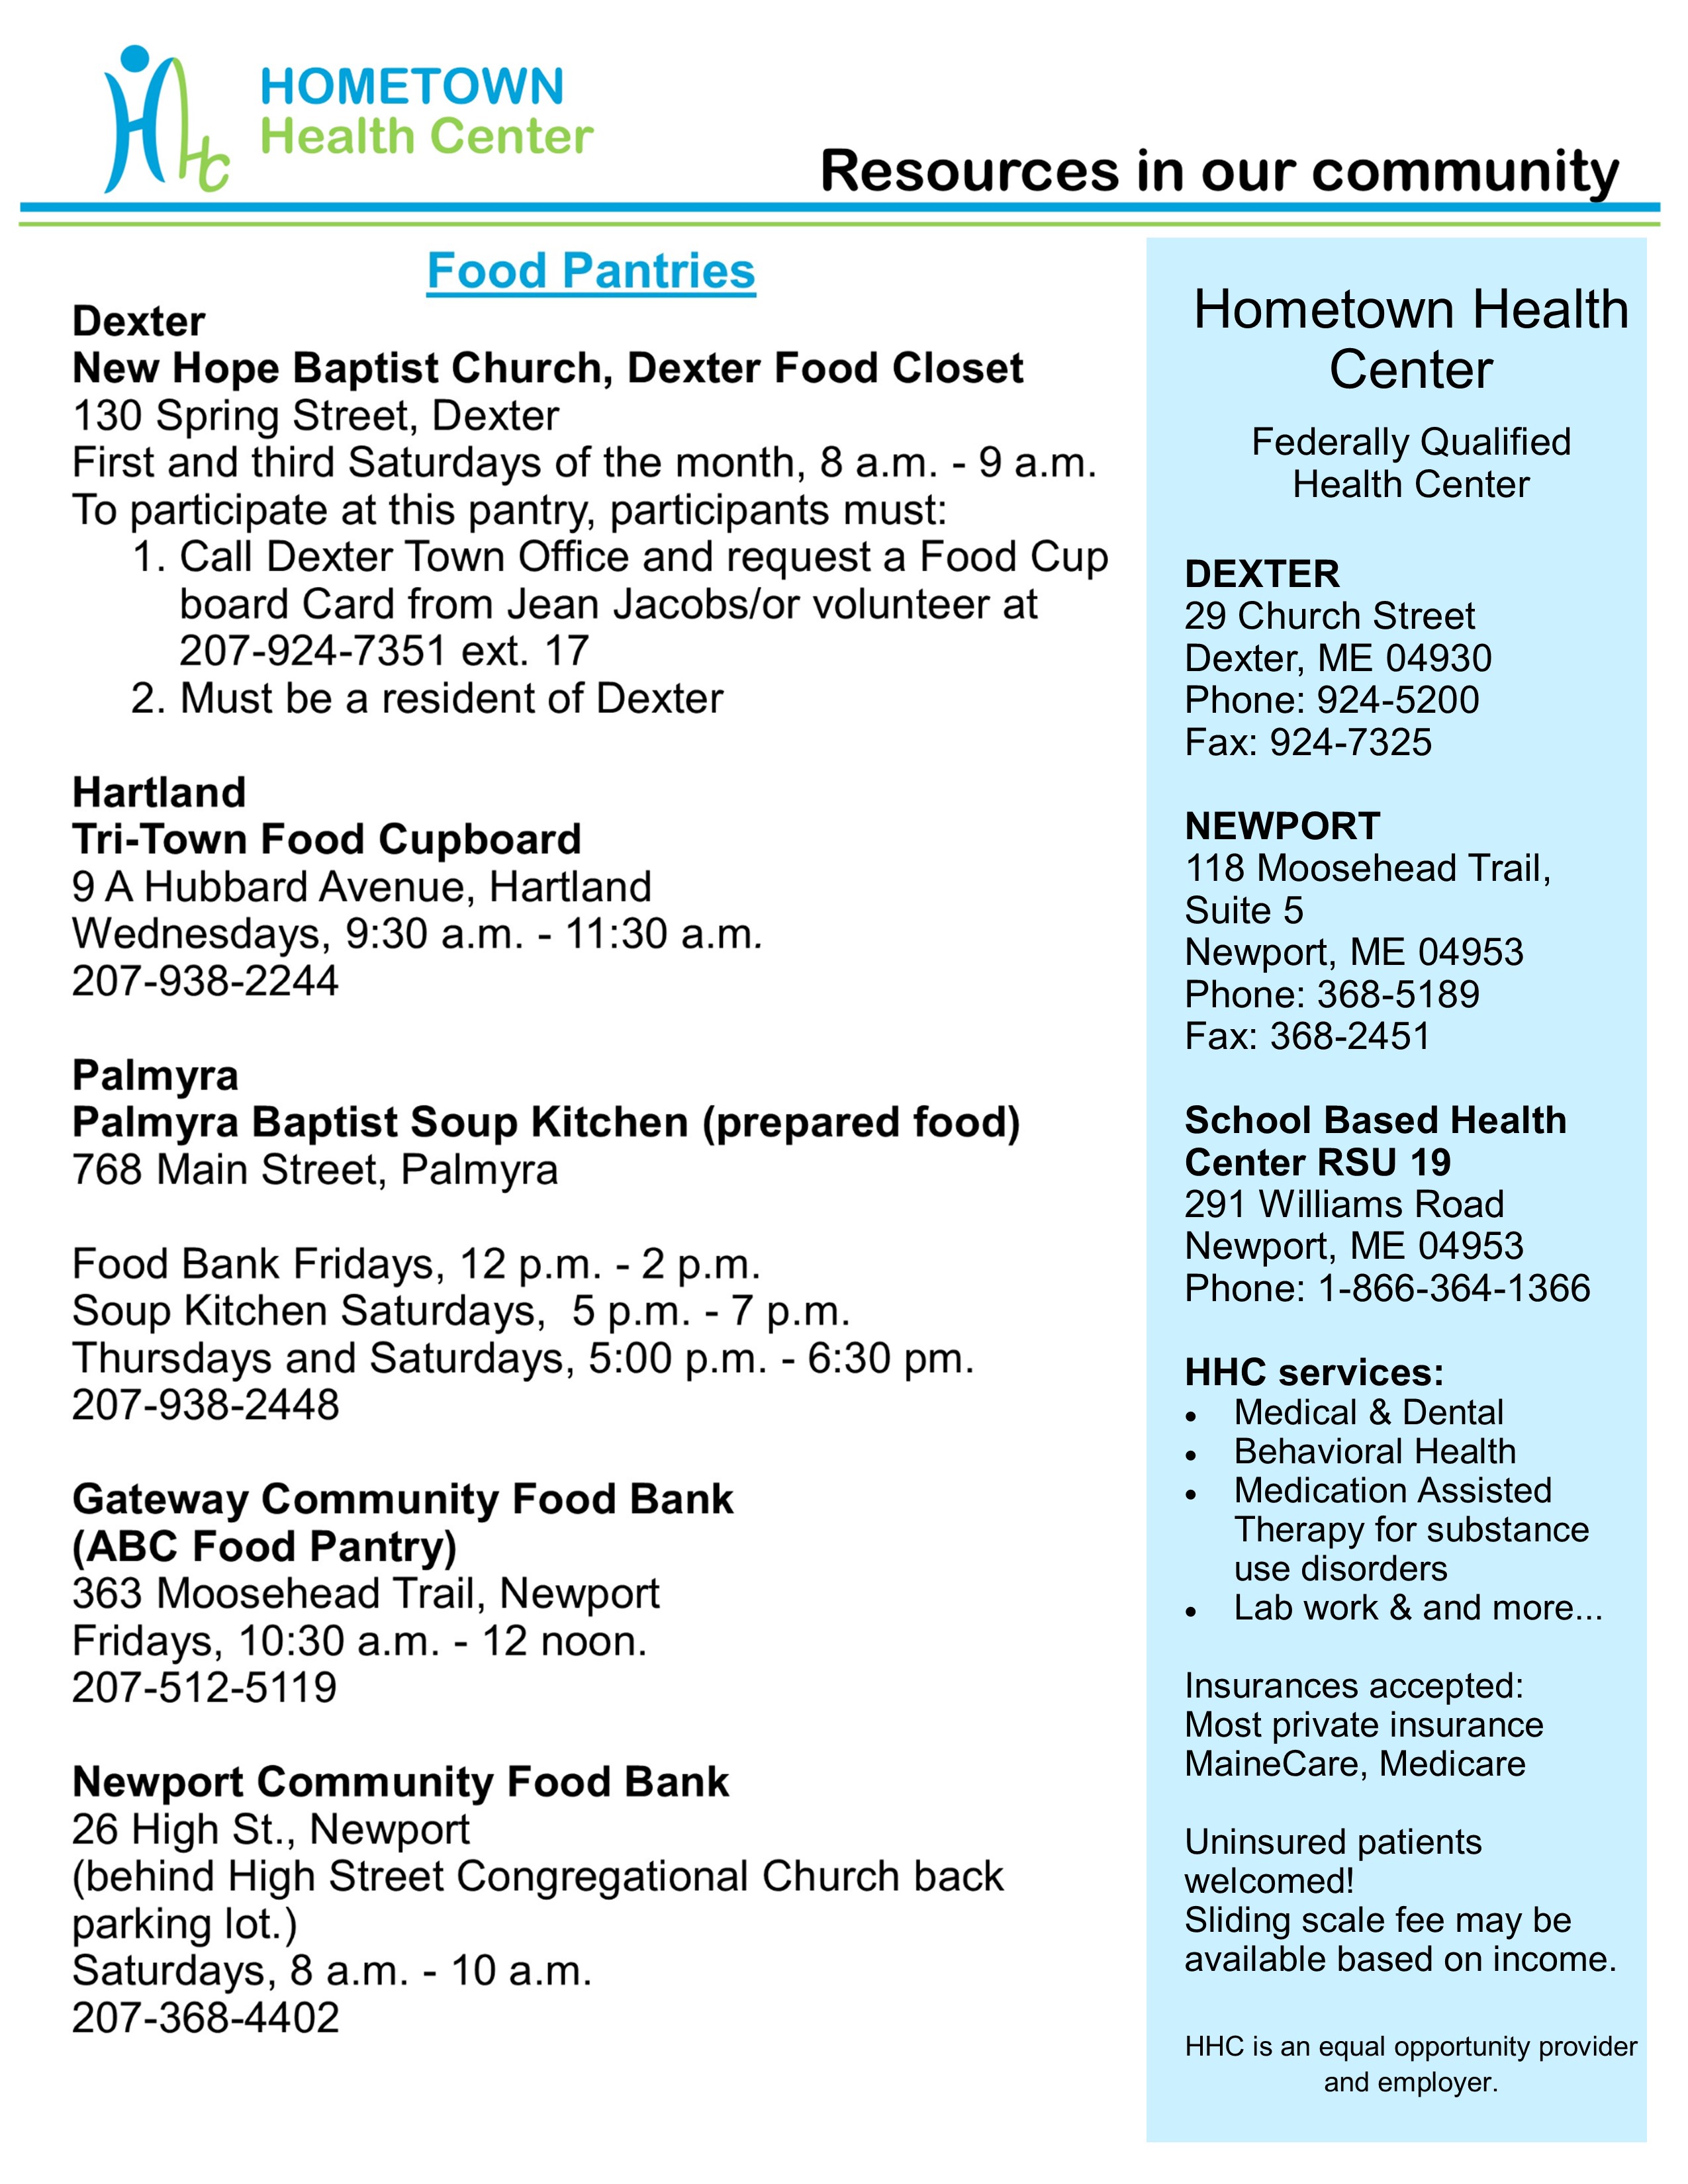 Community Resources - Hometown Health Center